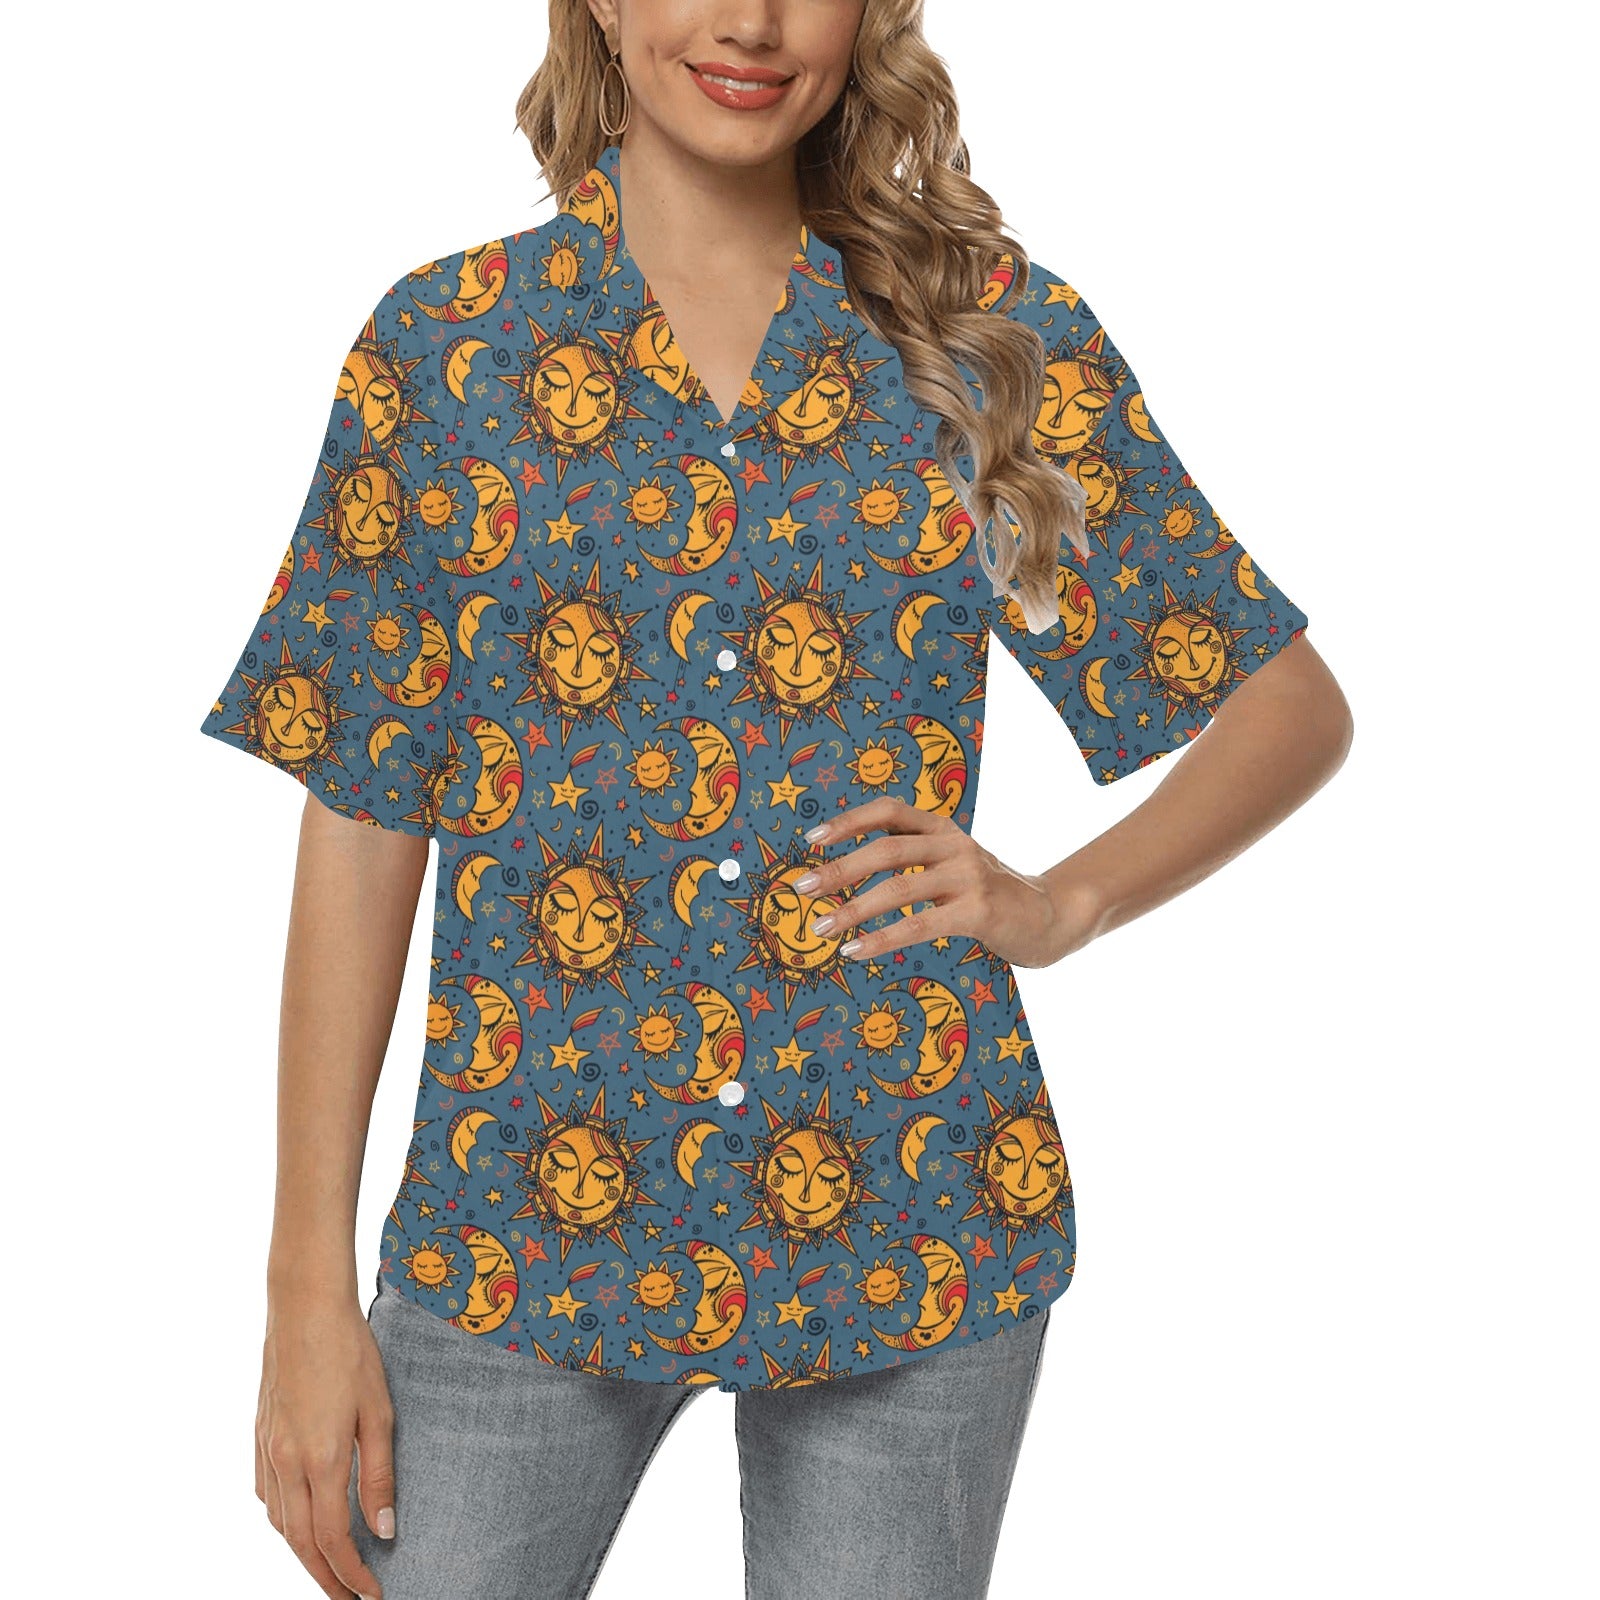 Celestial Moon Sun Pattern Print Design 02 Women's Hawaiian Shirt